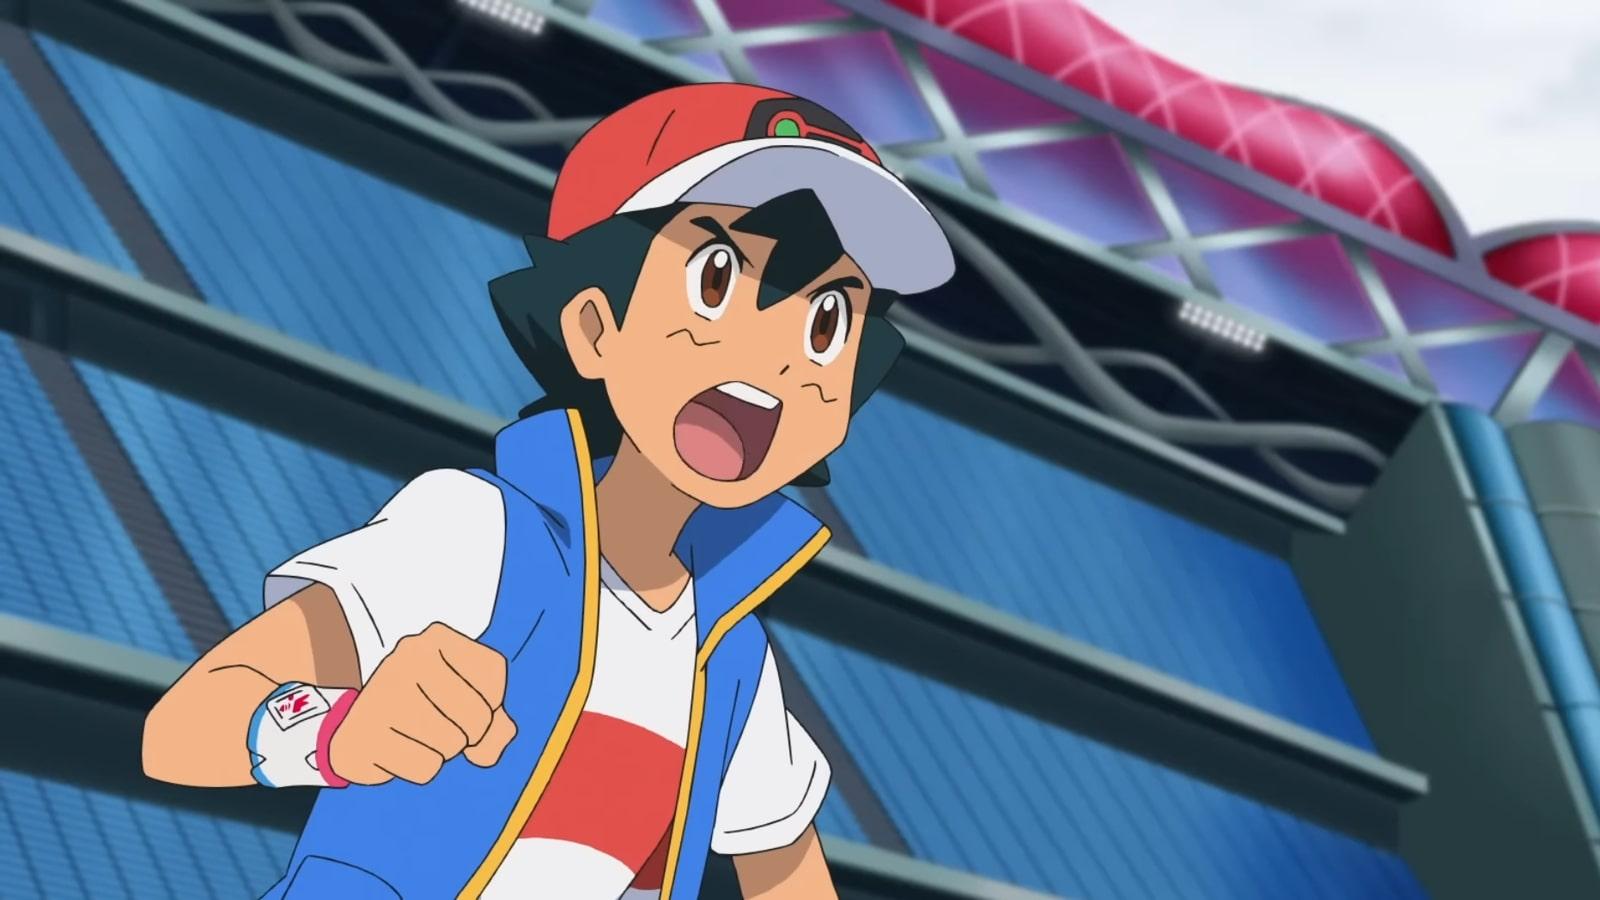 Ash Ketchum commands pikachu in pokemon journeys anime